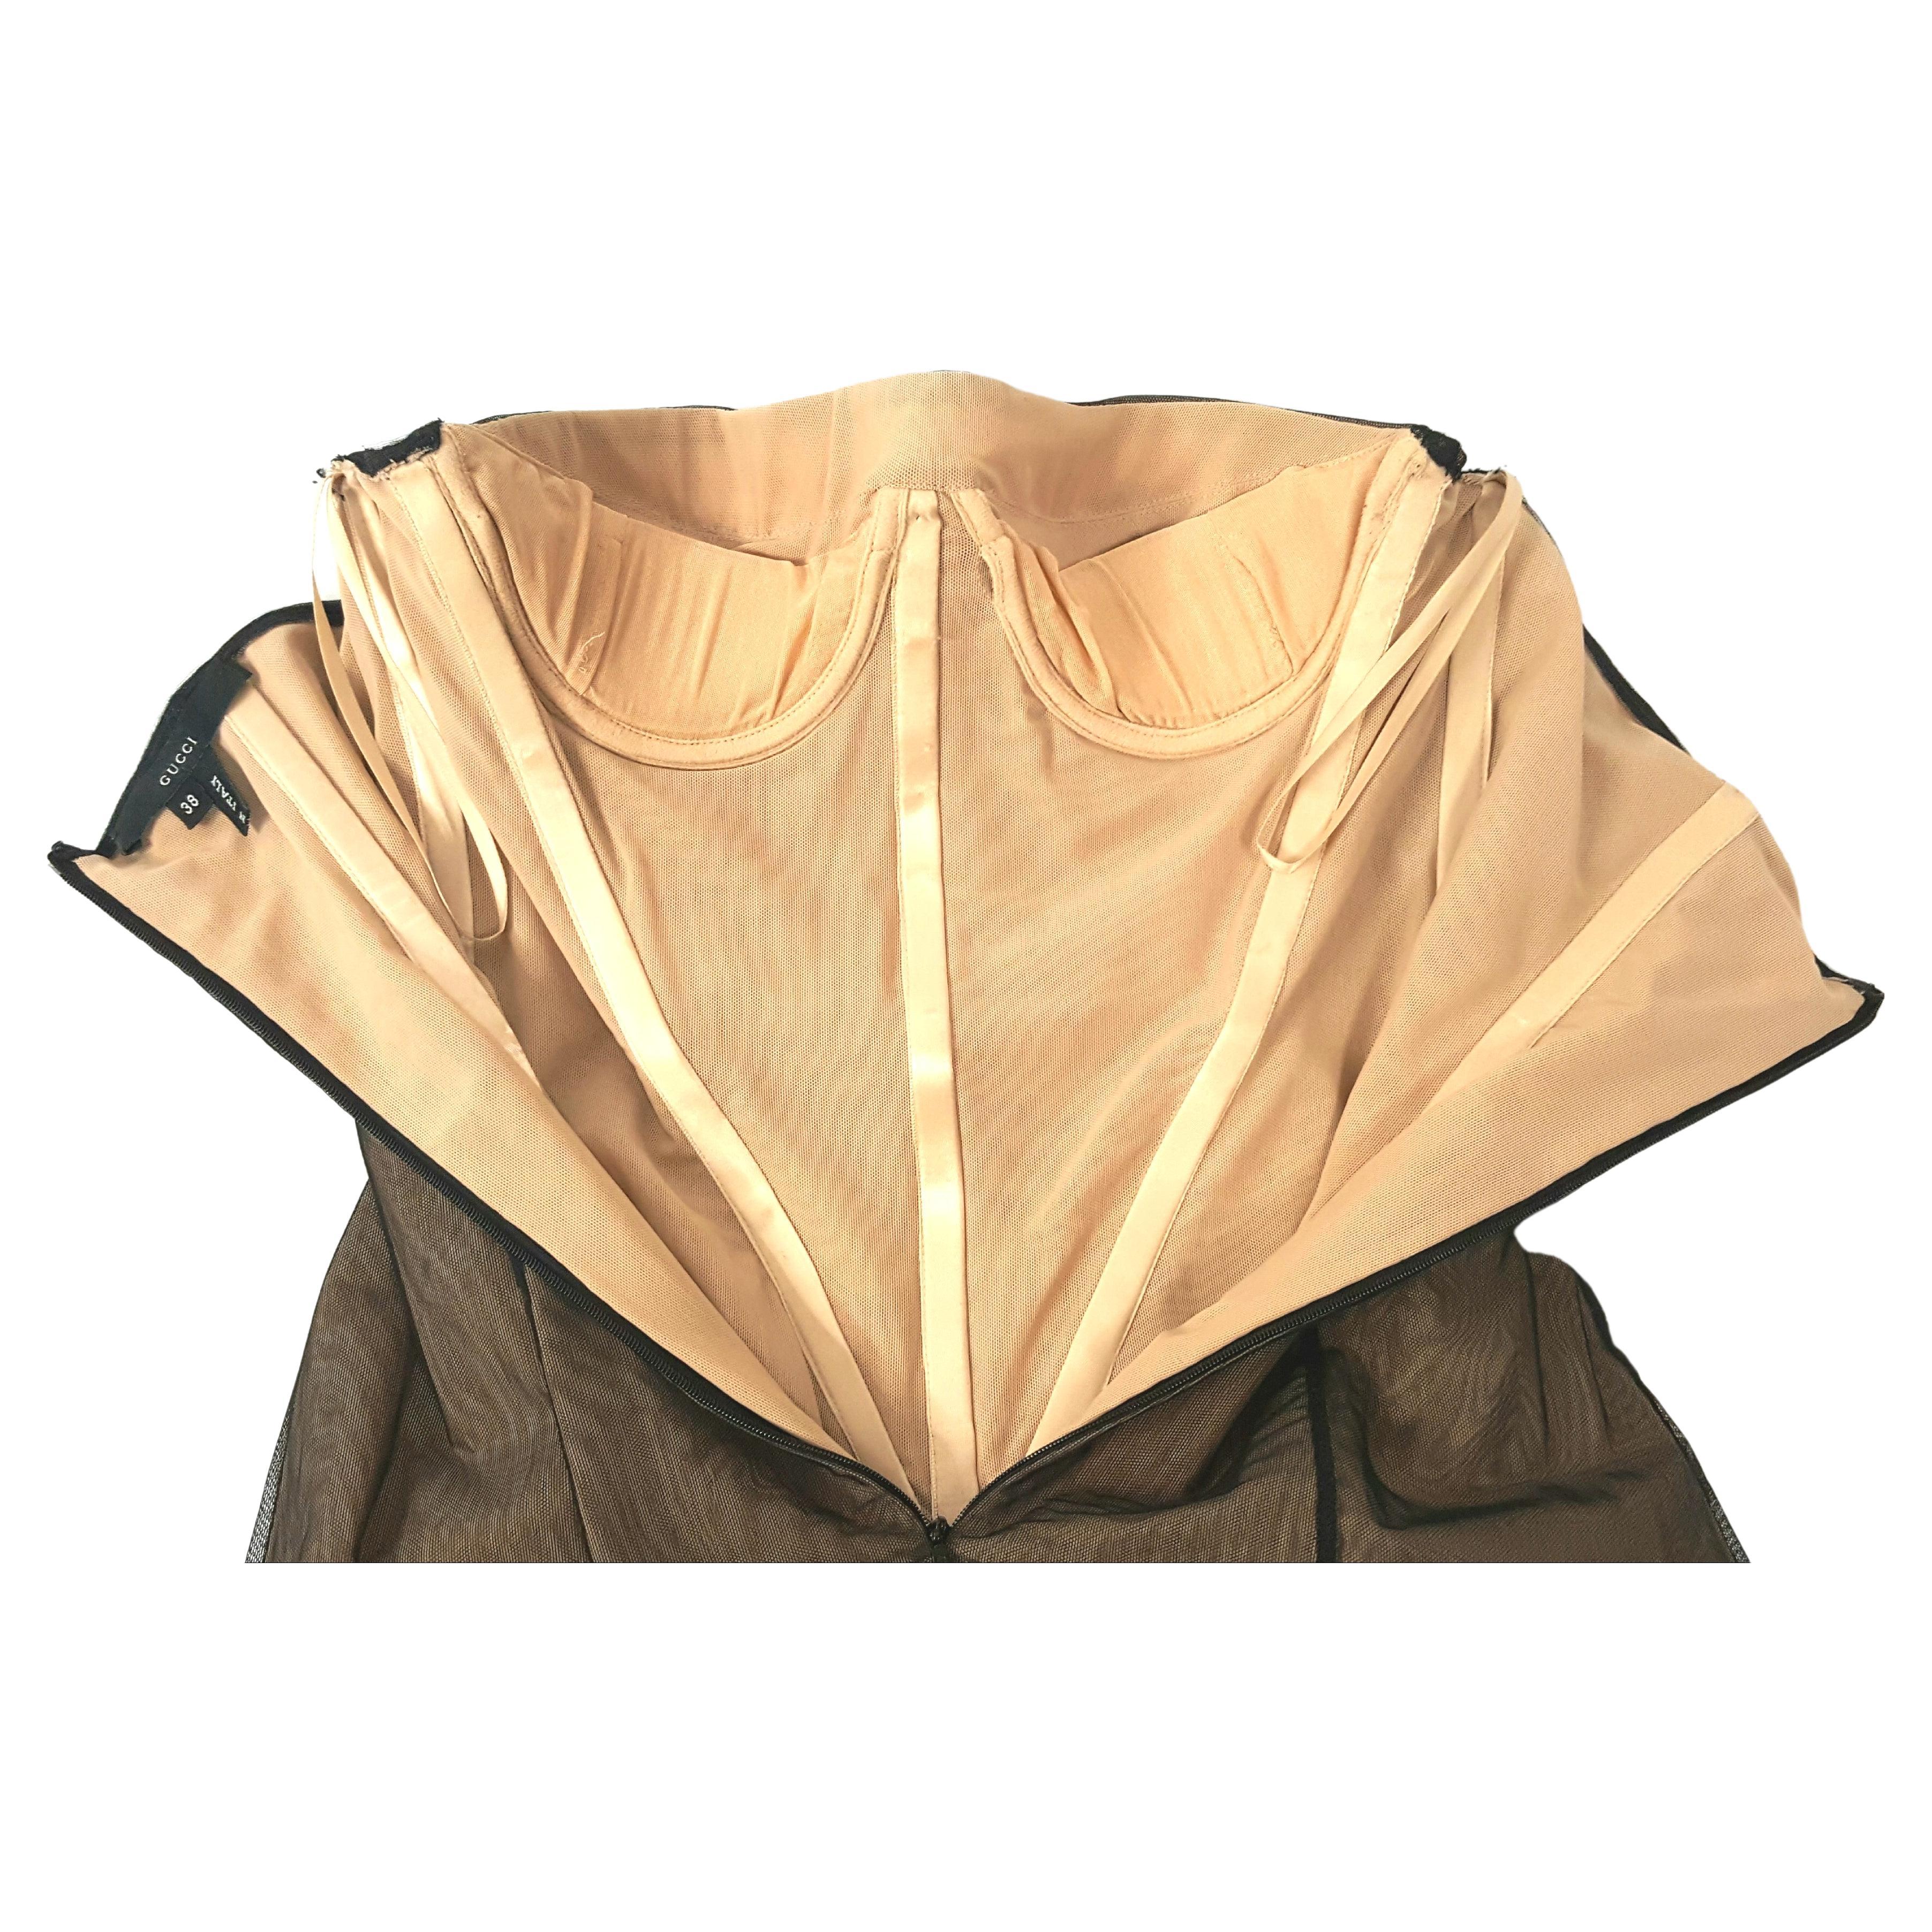 Gucci TomFord 2001 AwardYear RunwayLook2 Balconette Korsett trägerloses nudefarbenes Kleid mit Korsett Damen im Angebot